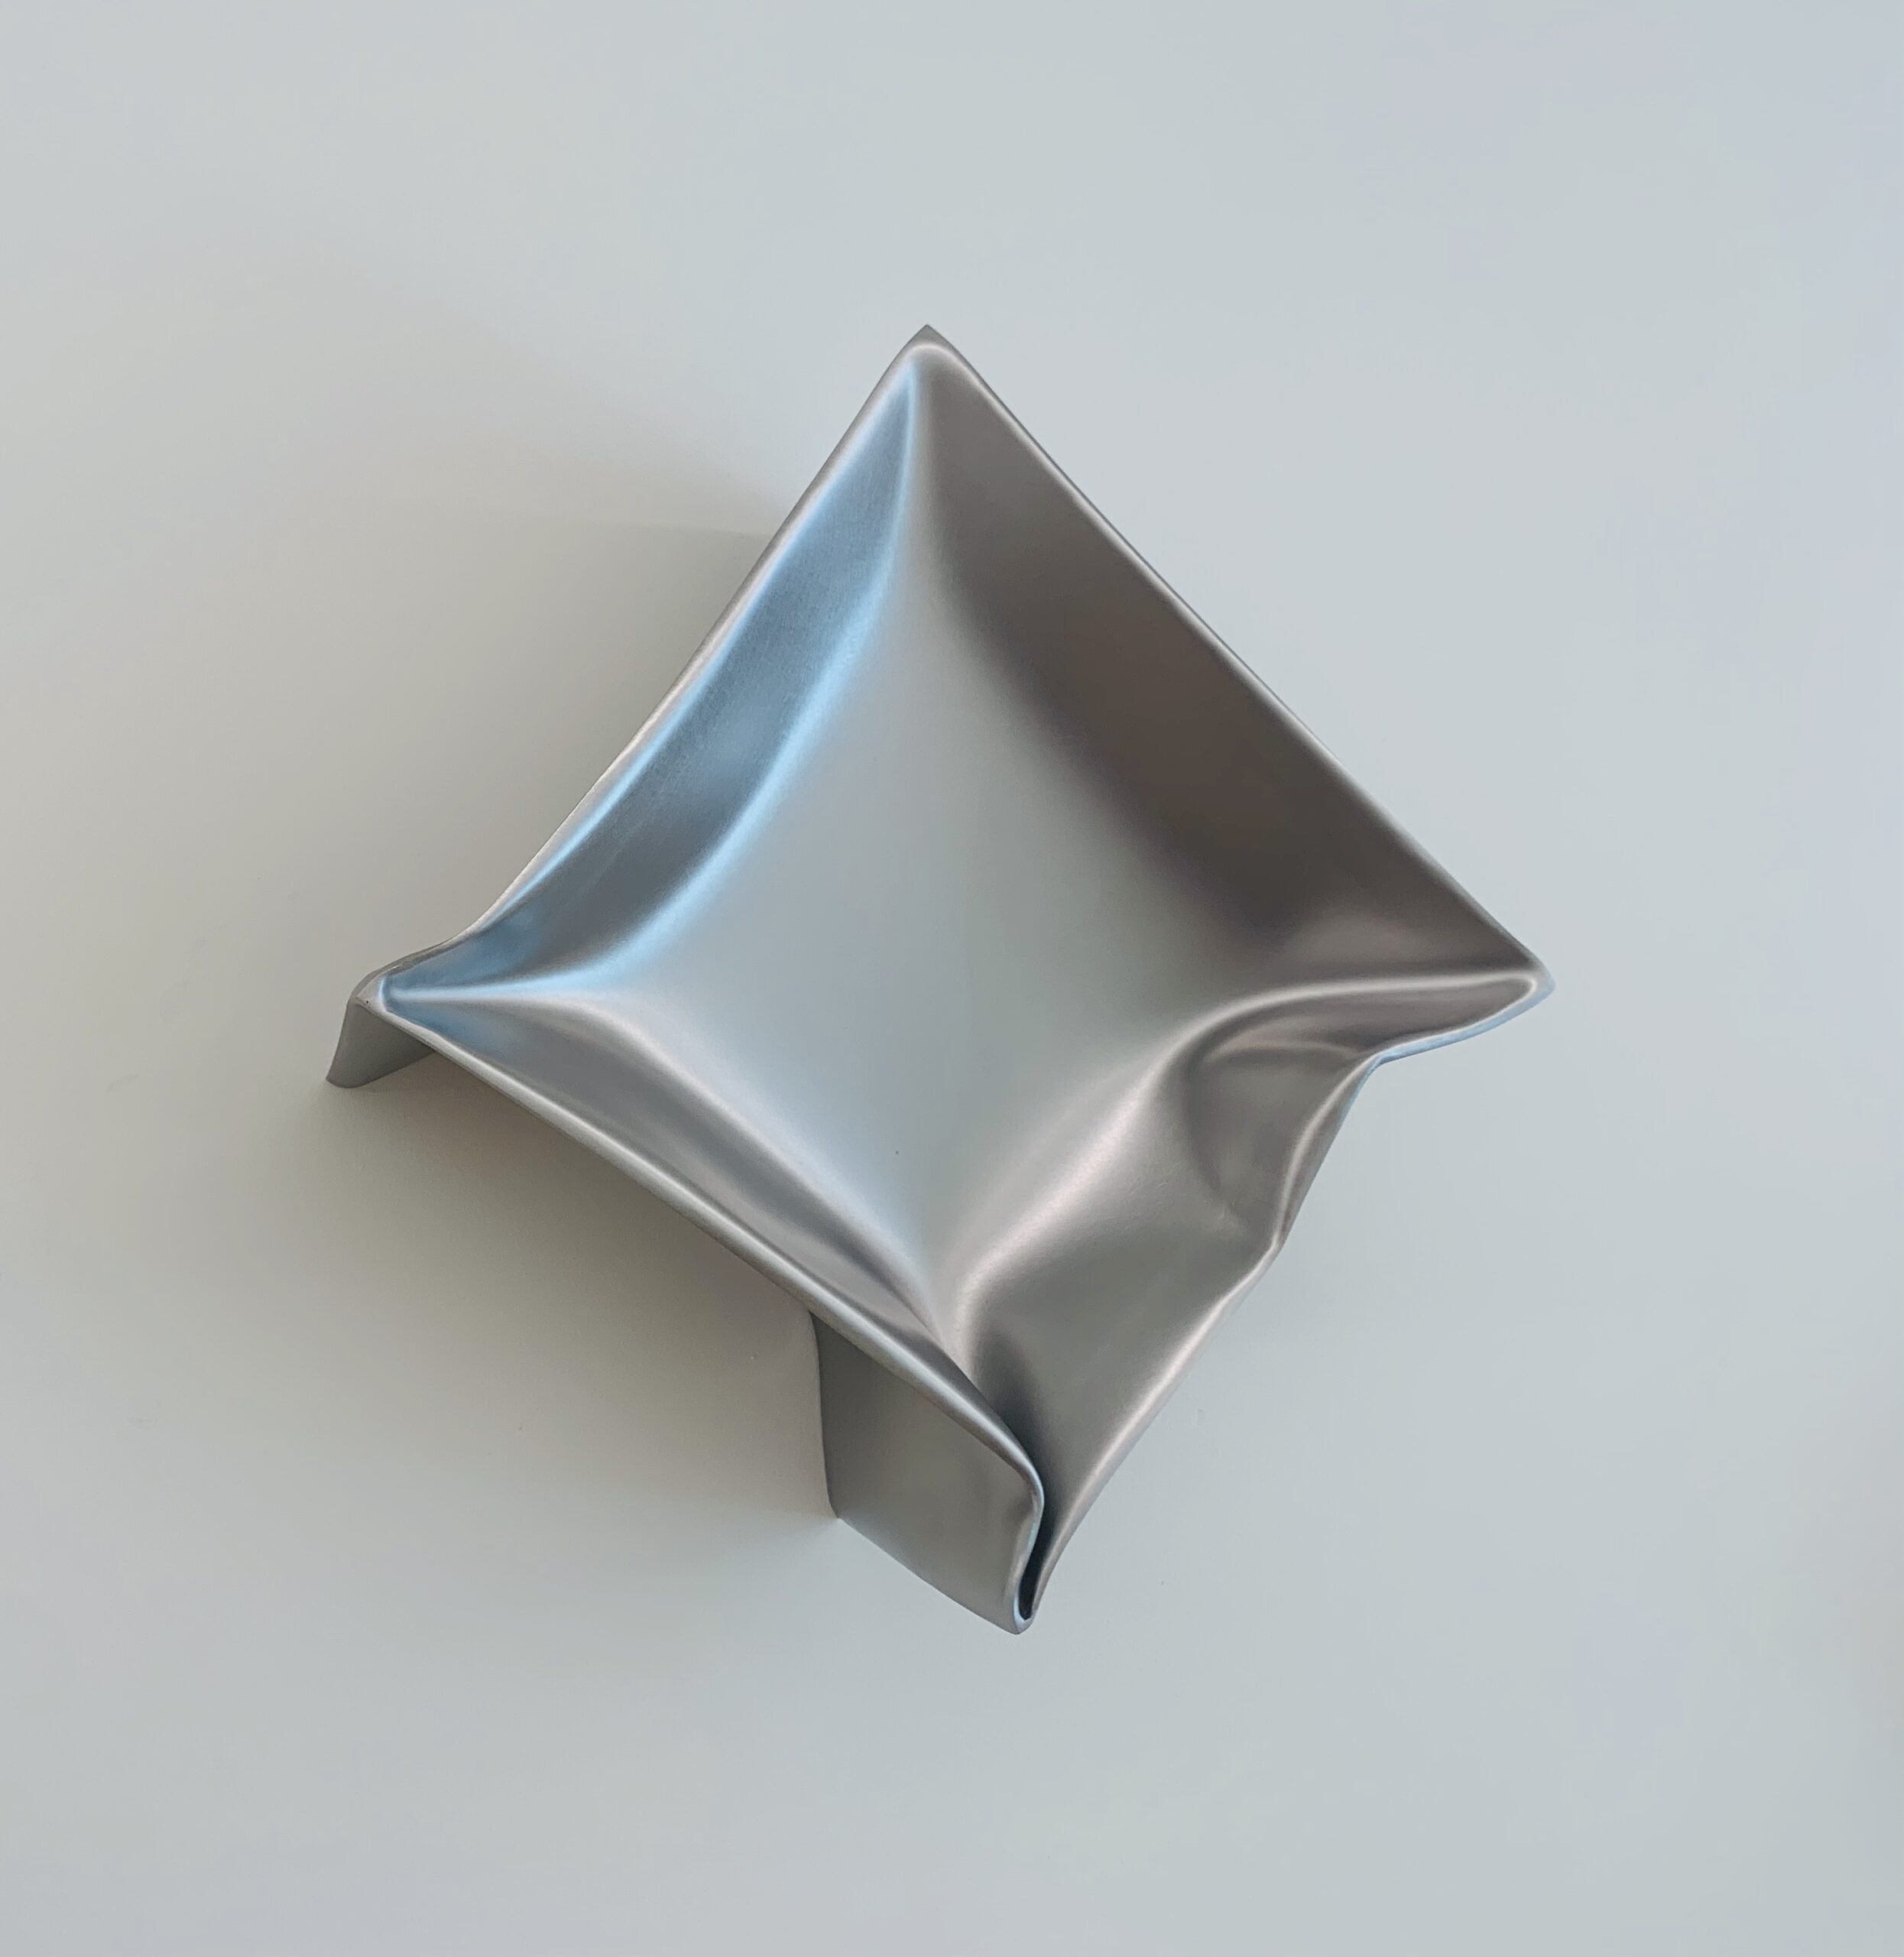 Ewerdt Hilgemann, Half Cube (Flying Object), 2020